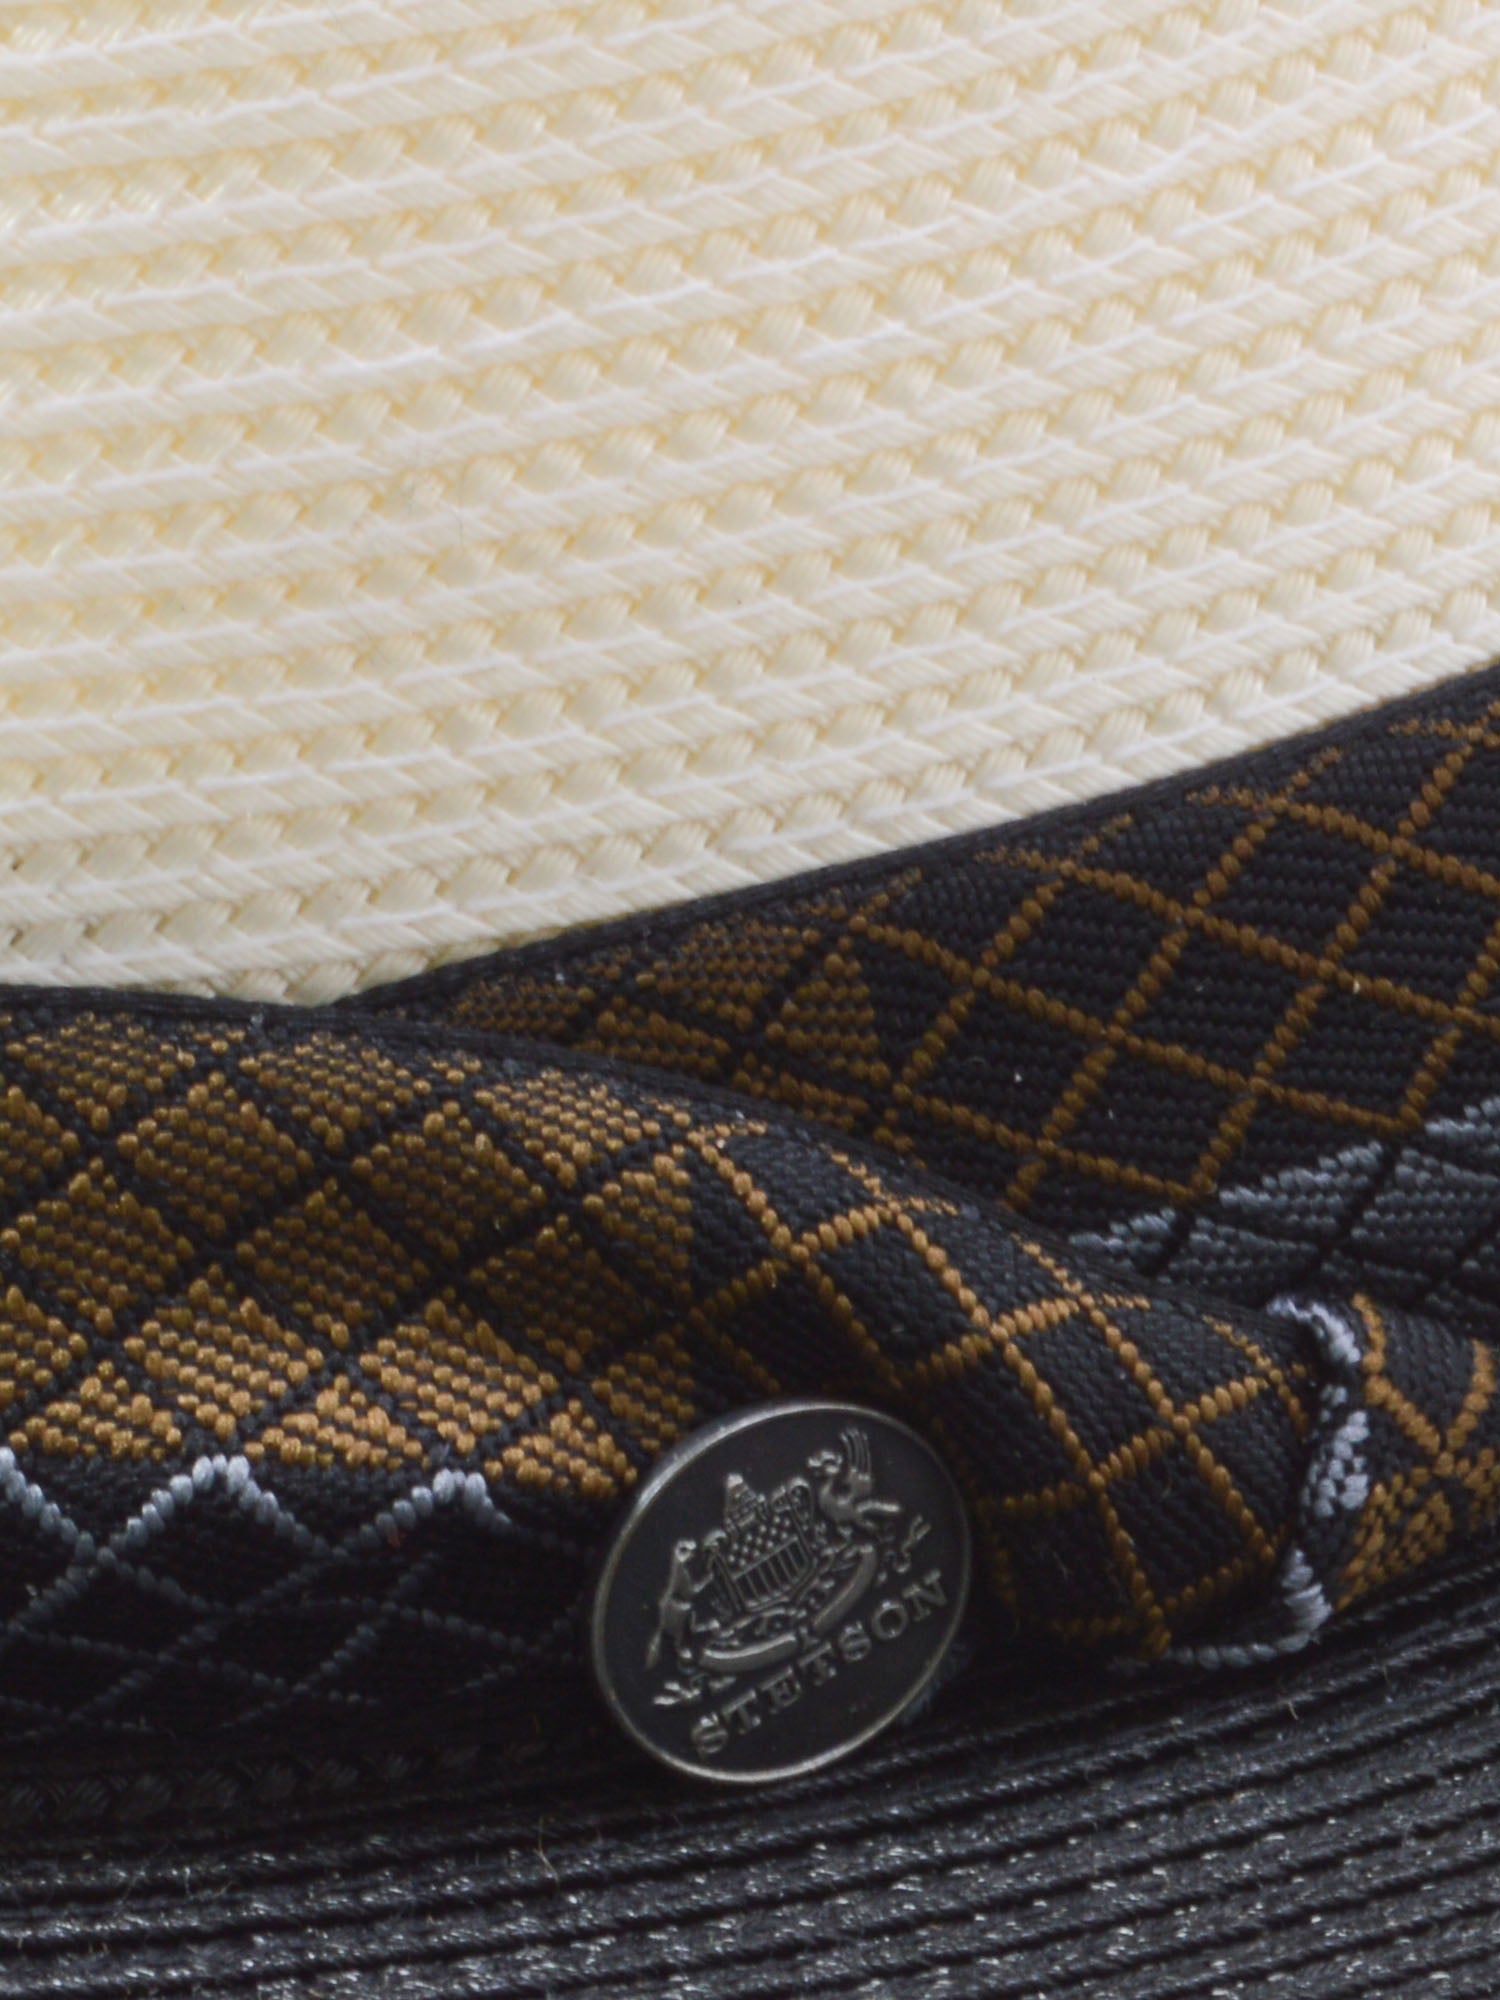 Stetson Andover Florentine Milan Straw Hat in Ivory/Black-3